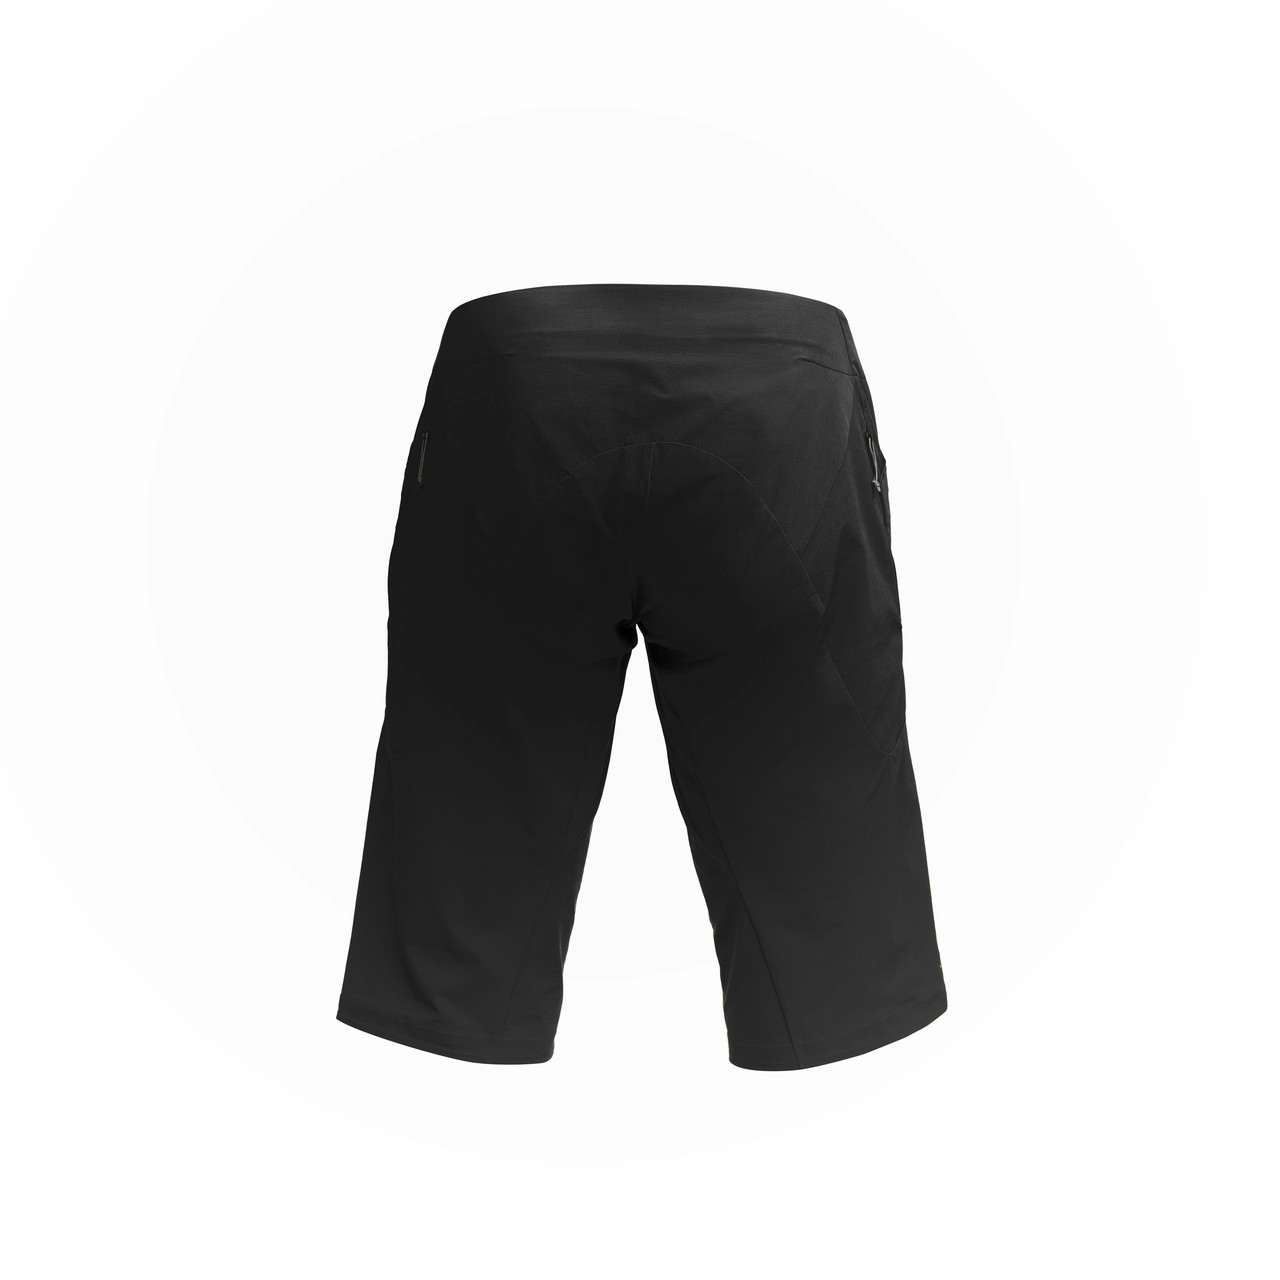 Glidepath Shorts Black